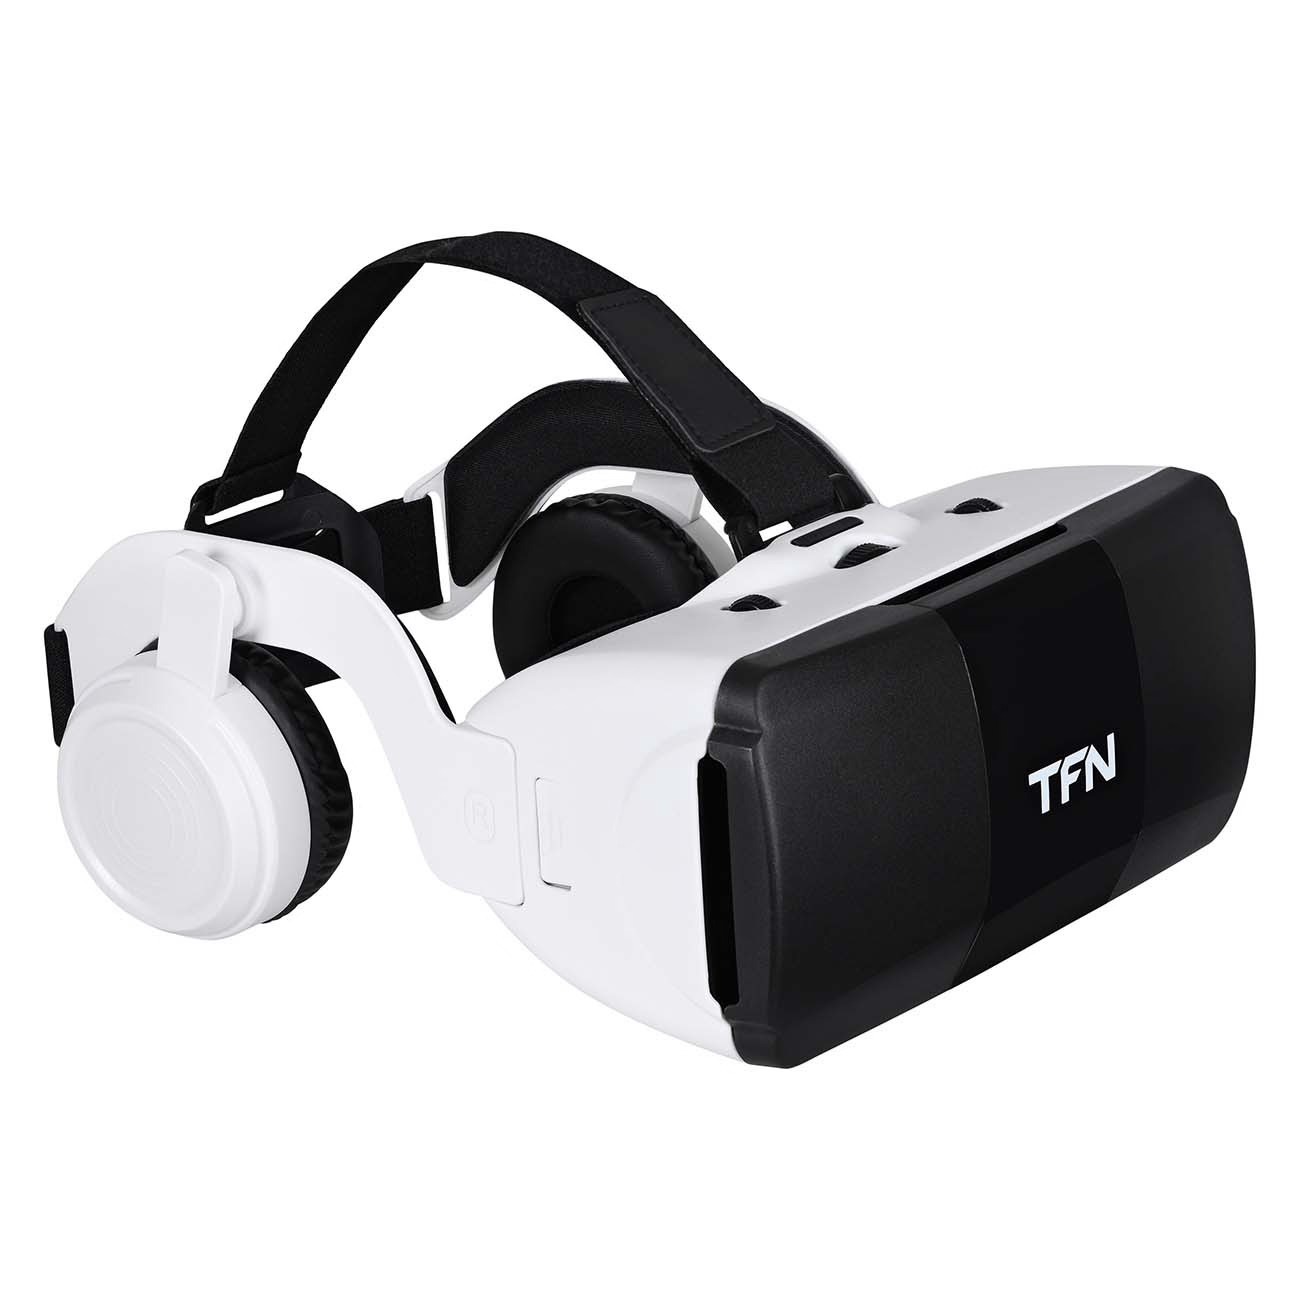 Очки виртуальной реальности Tfn vr beat pro white - фото 1